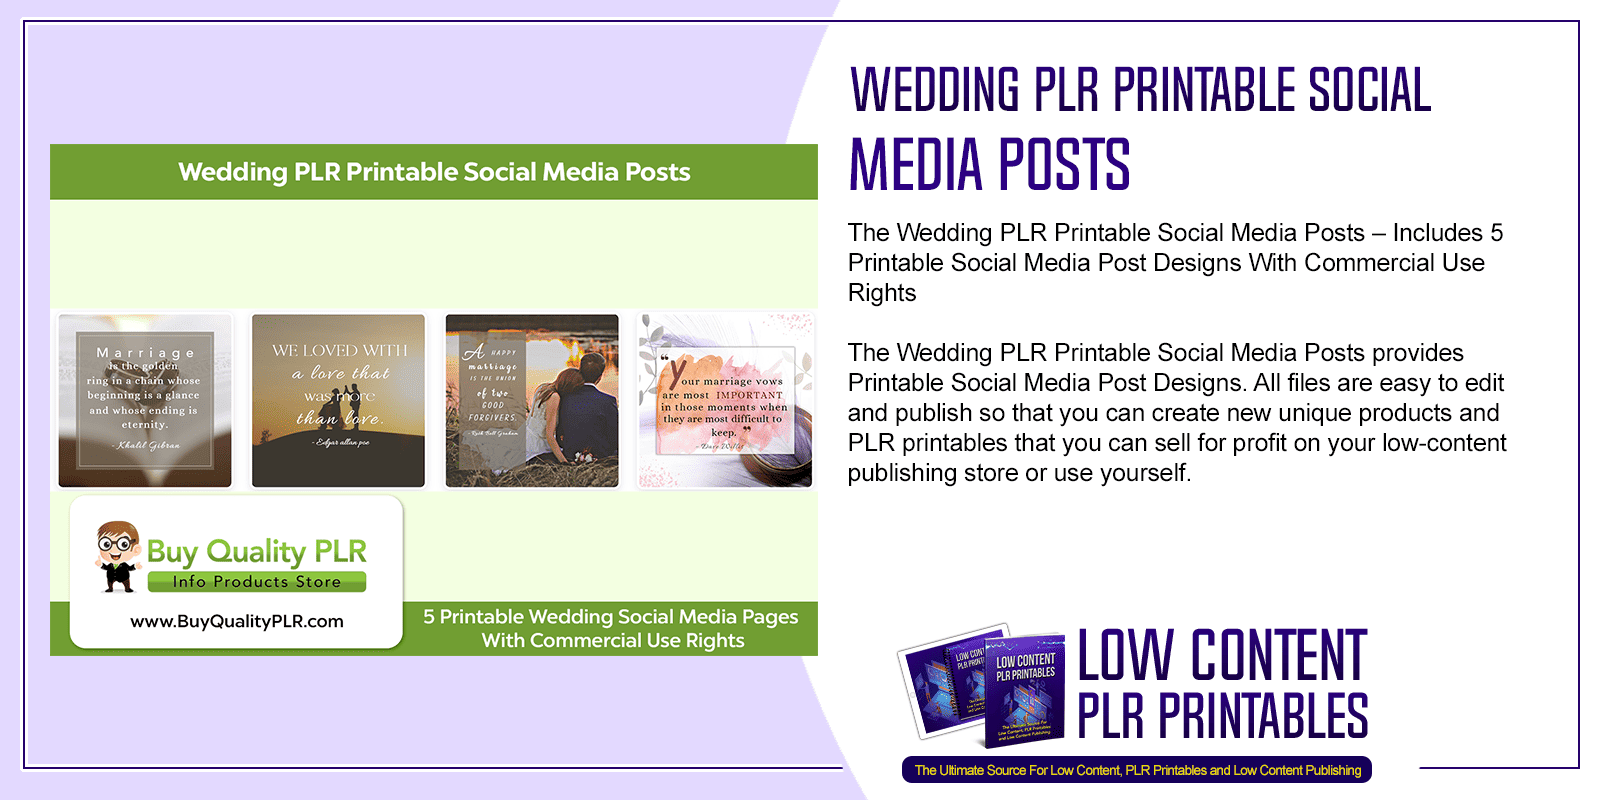 Wedding PLR Printable Social Media Posts